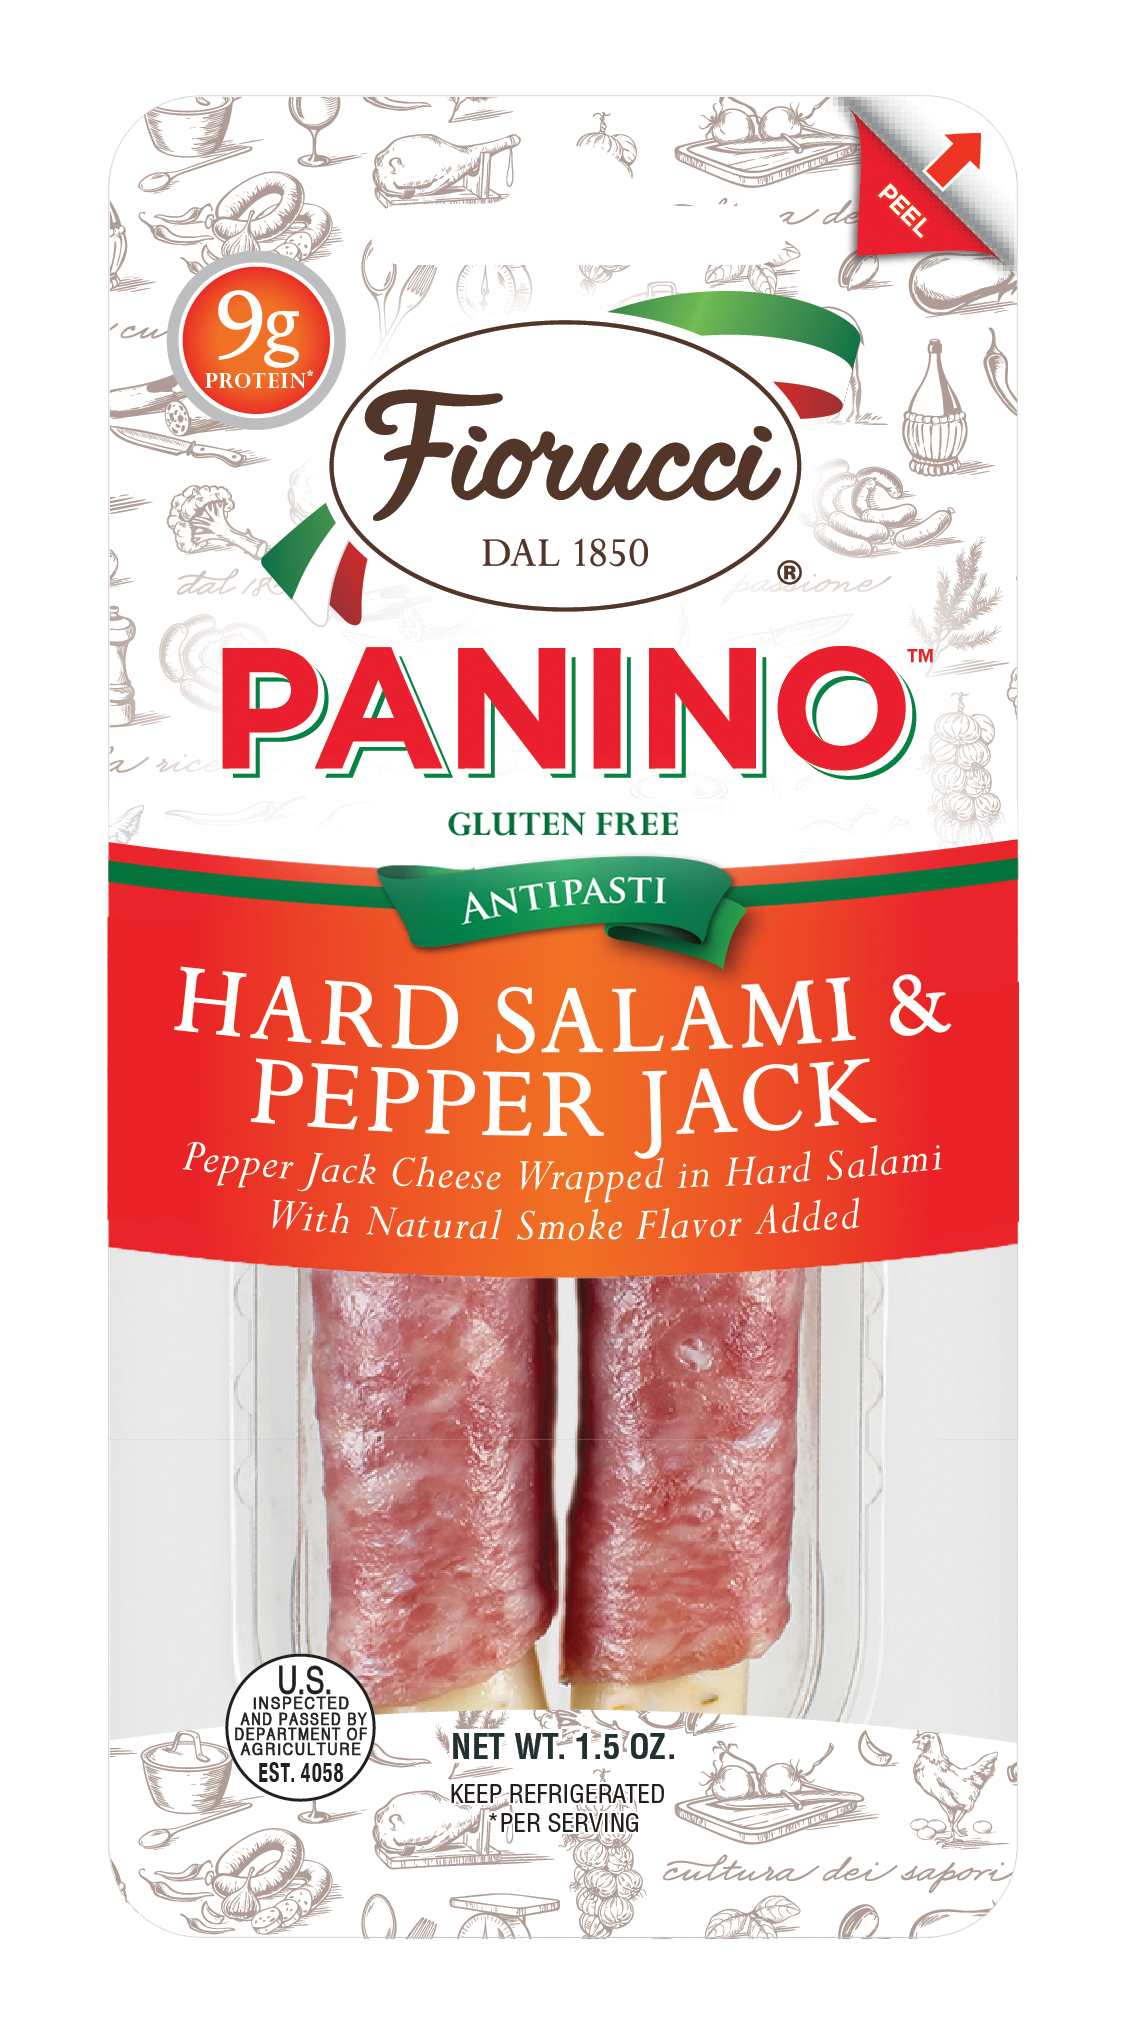 Hard Salami & Pepperjack